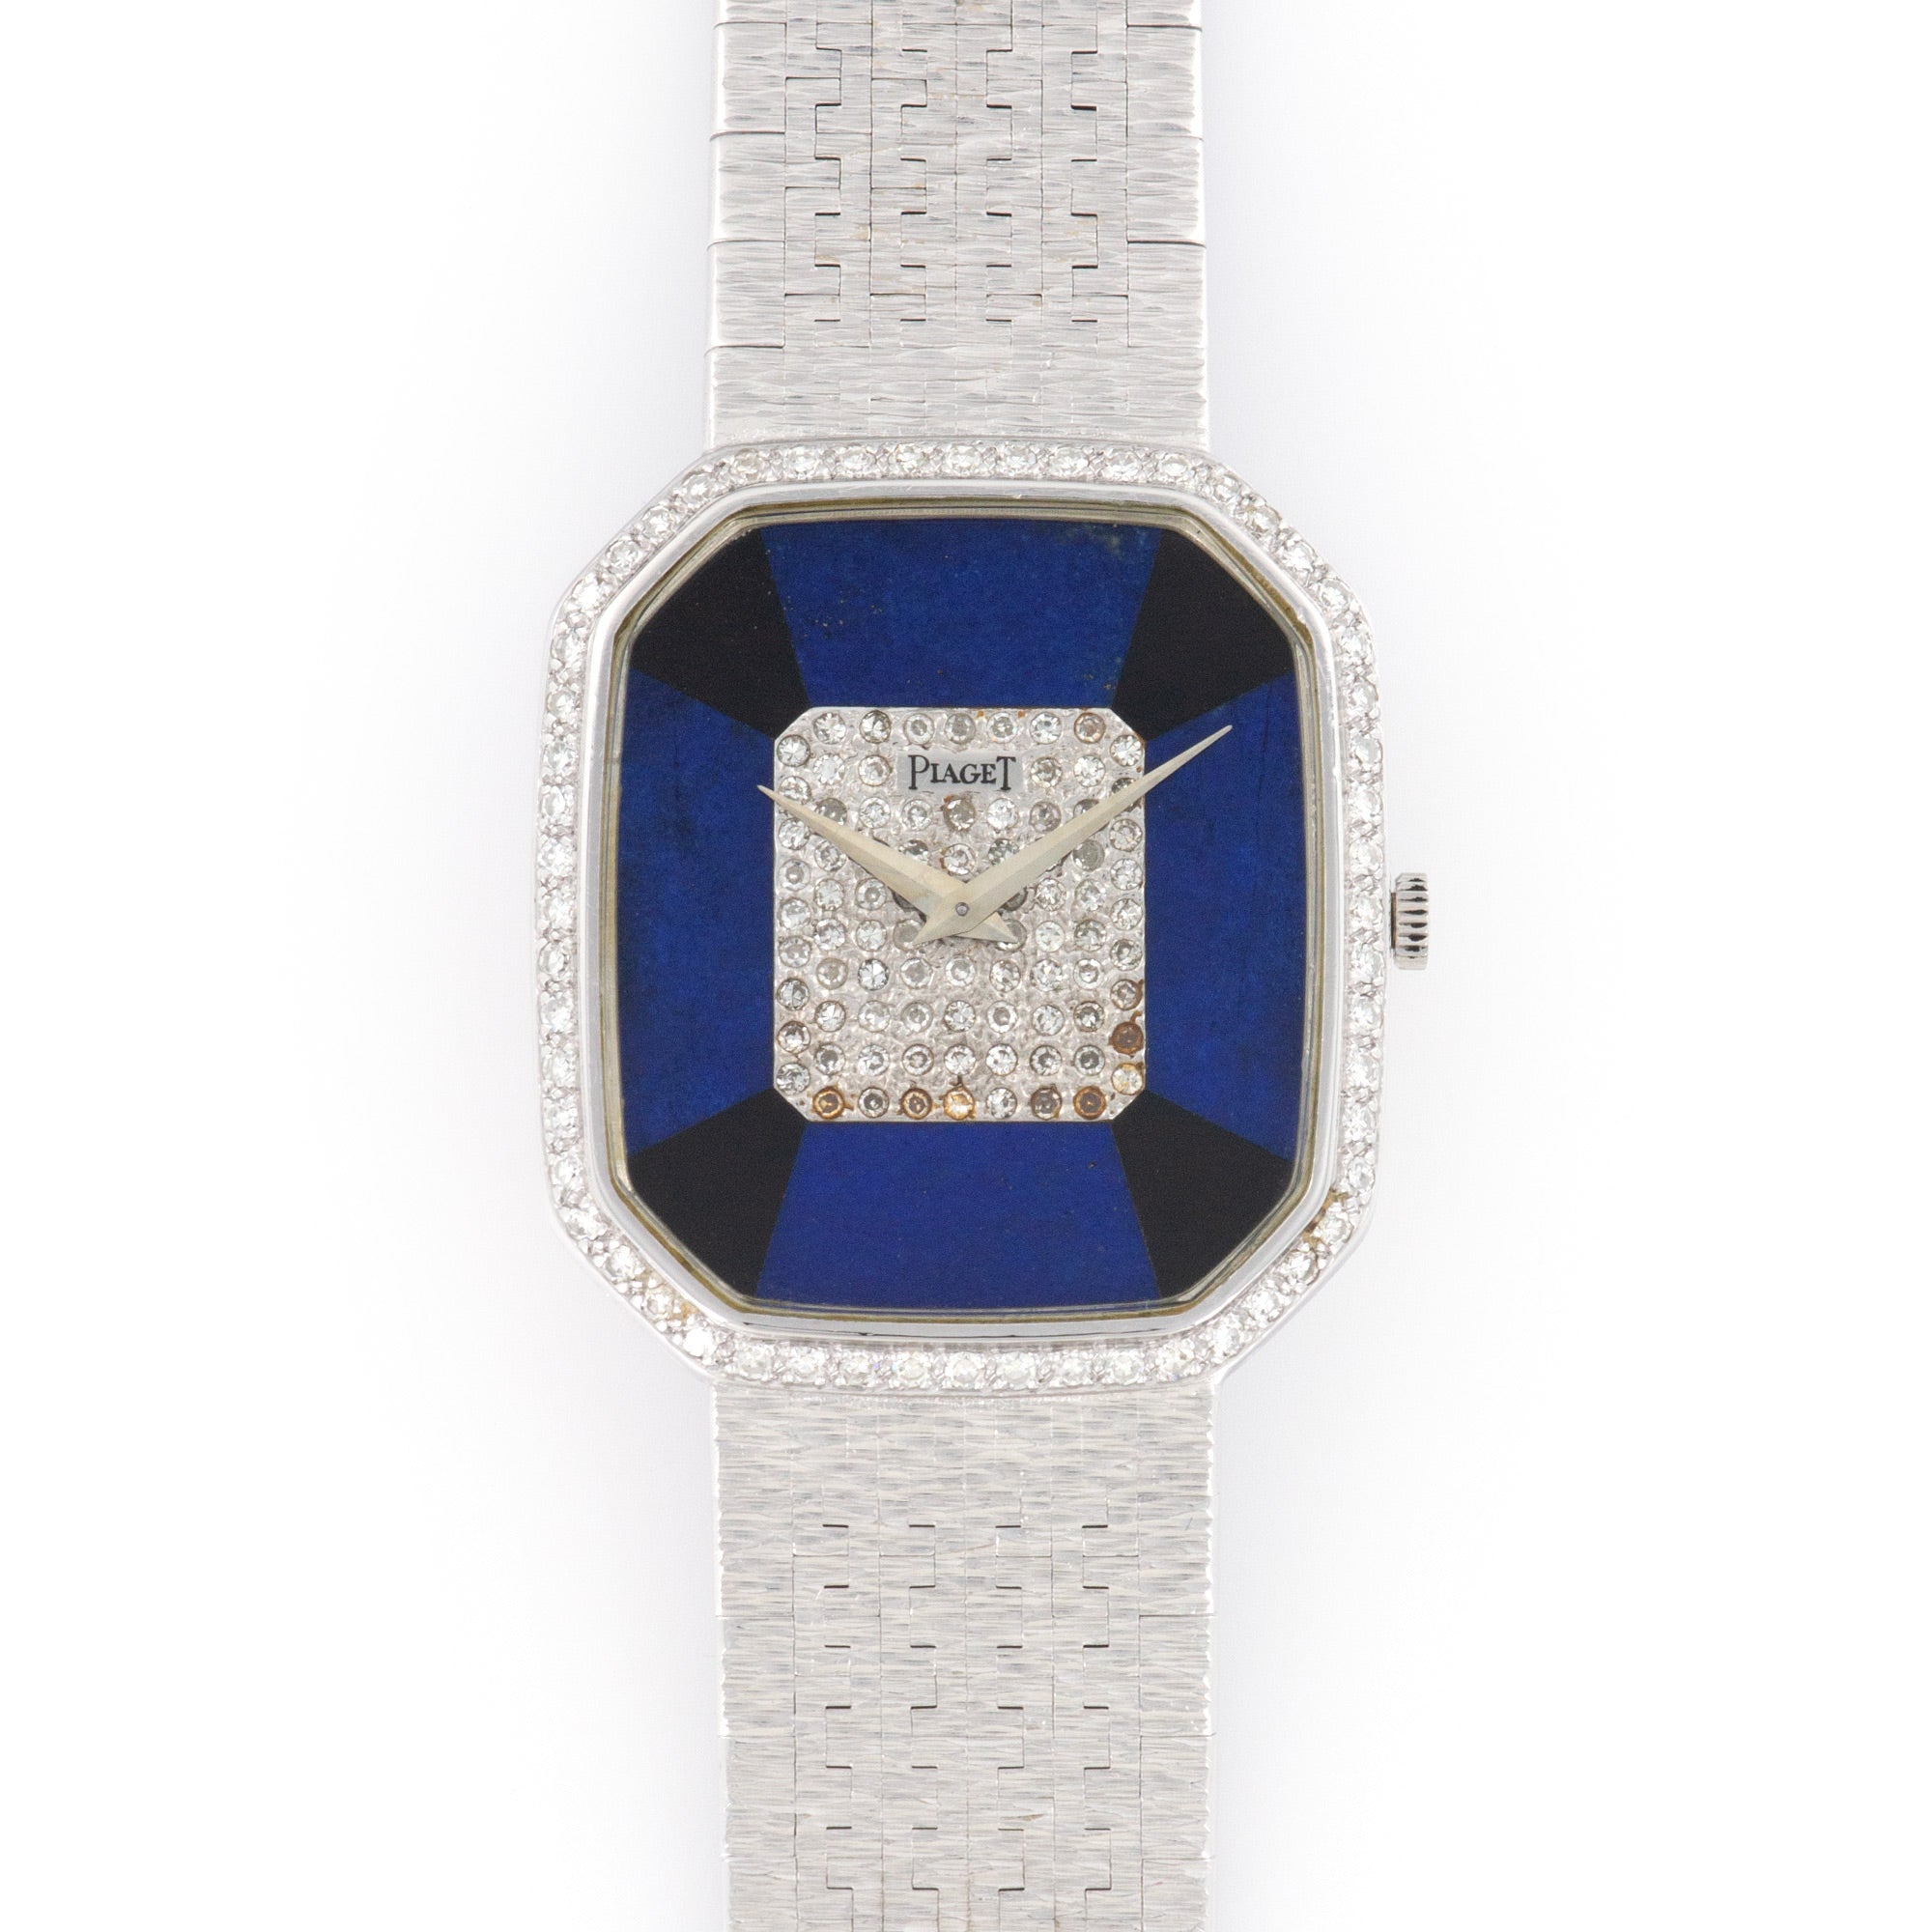 Piaget - Piaget White Gold Diamond Lapis Onyx Watch - The Keystone Watches